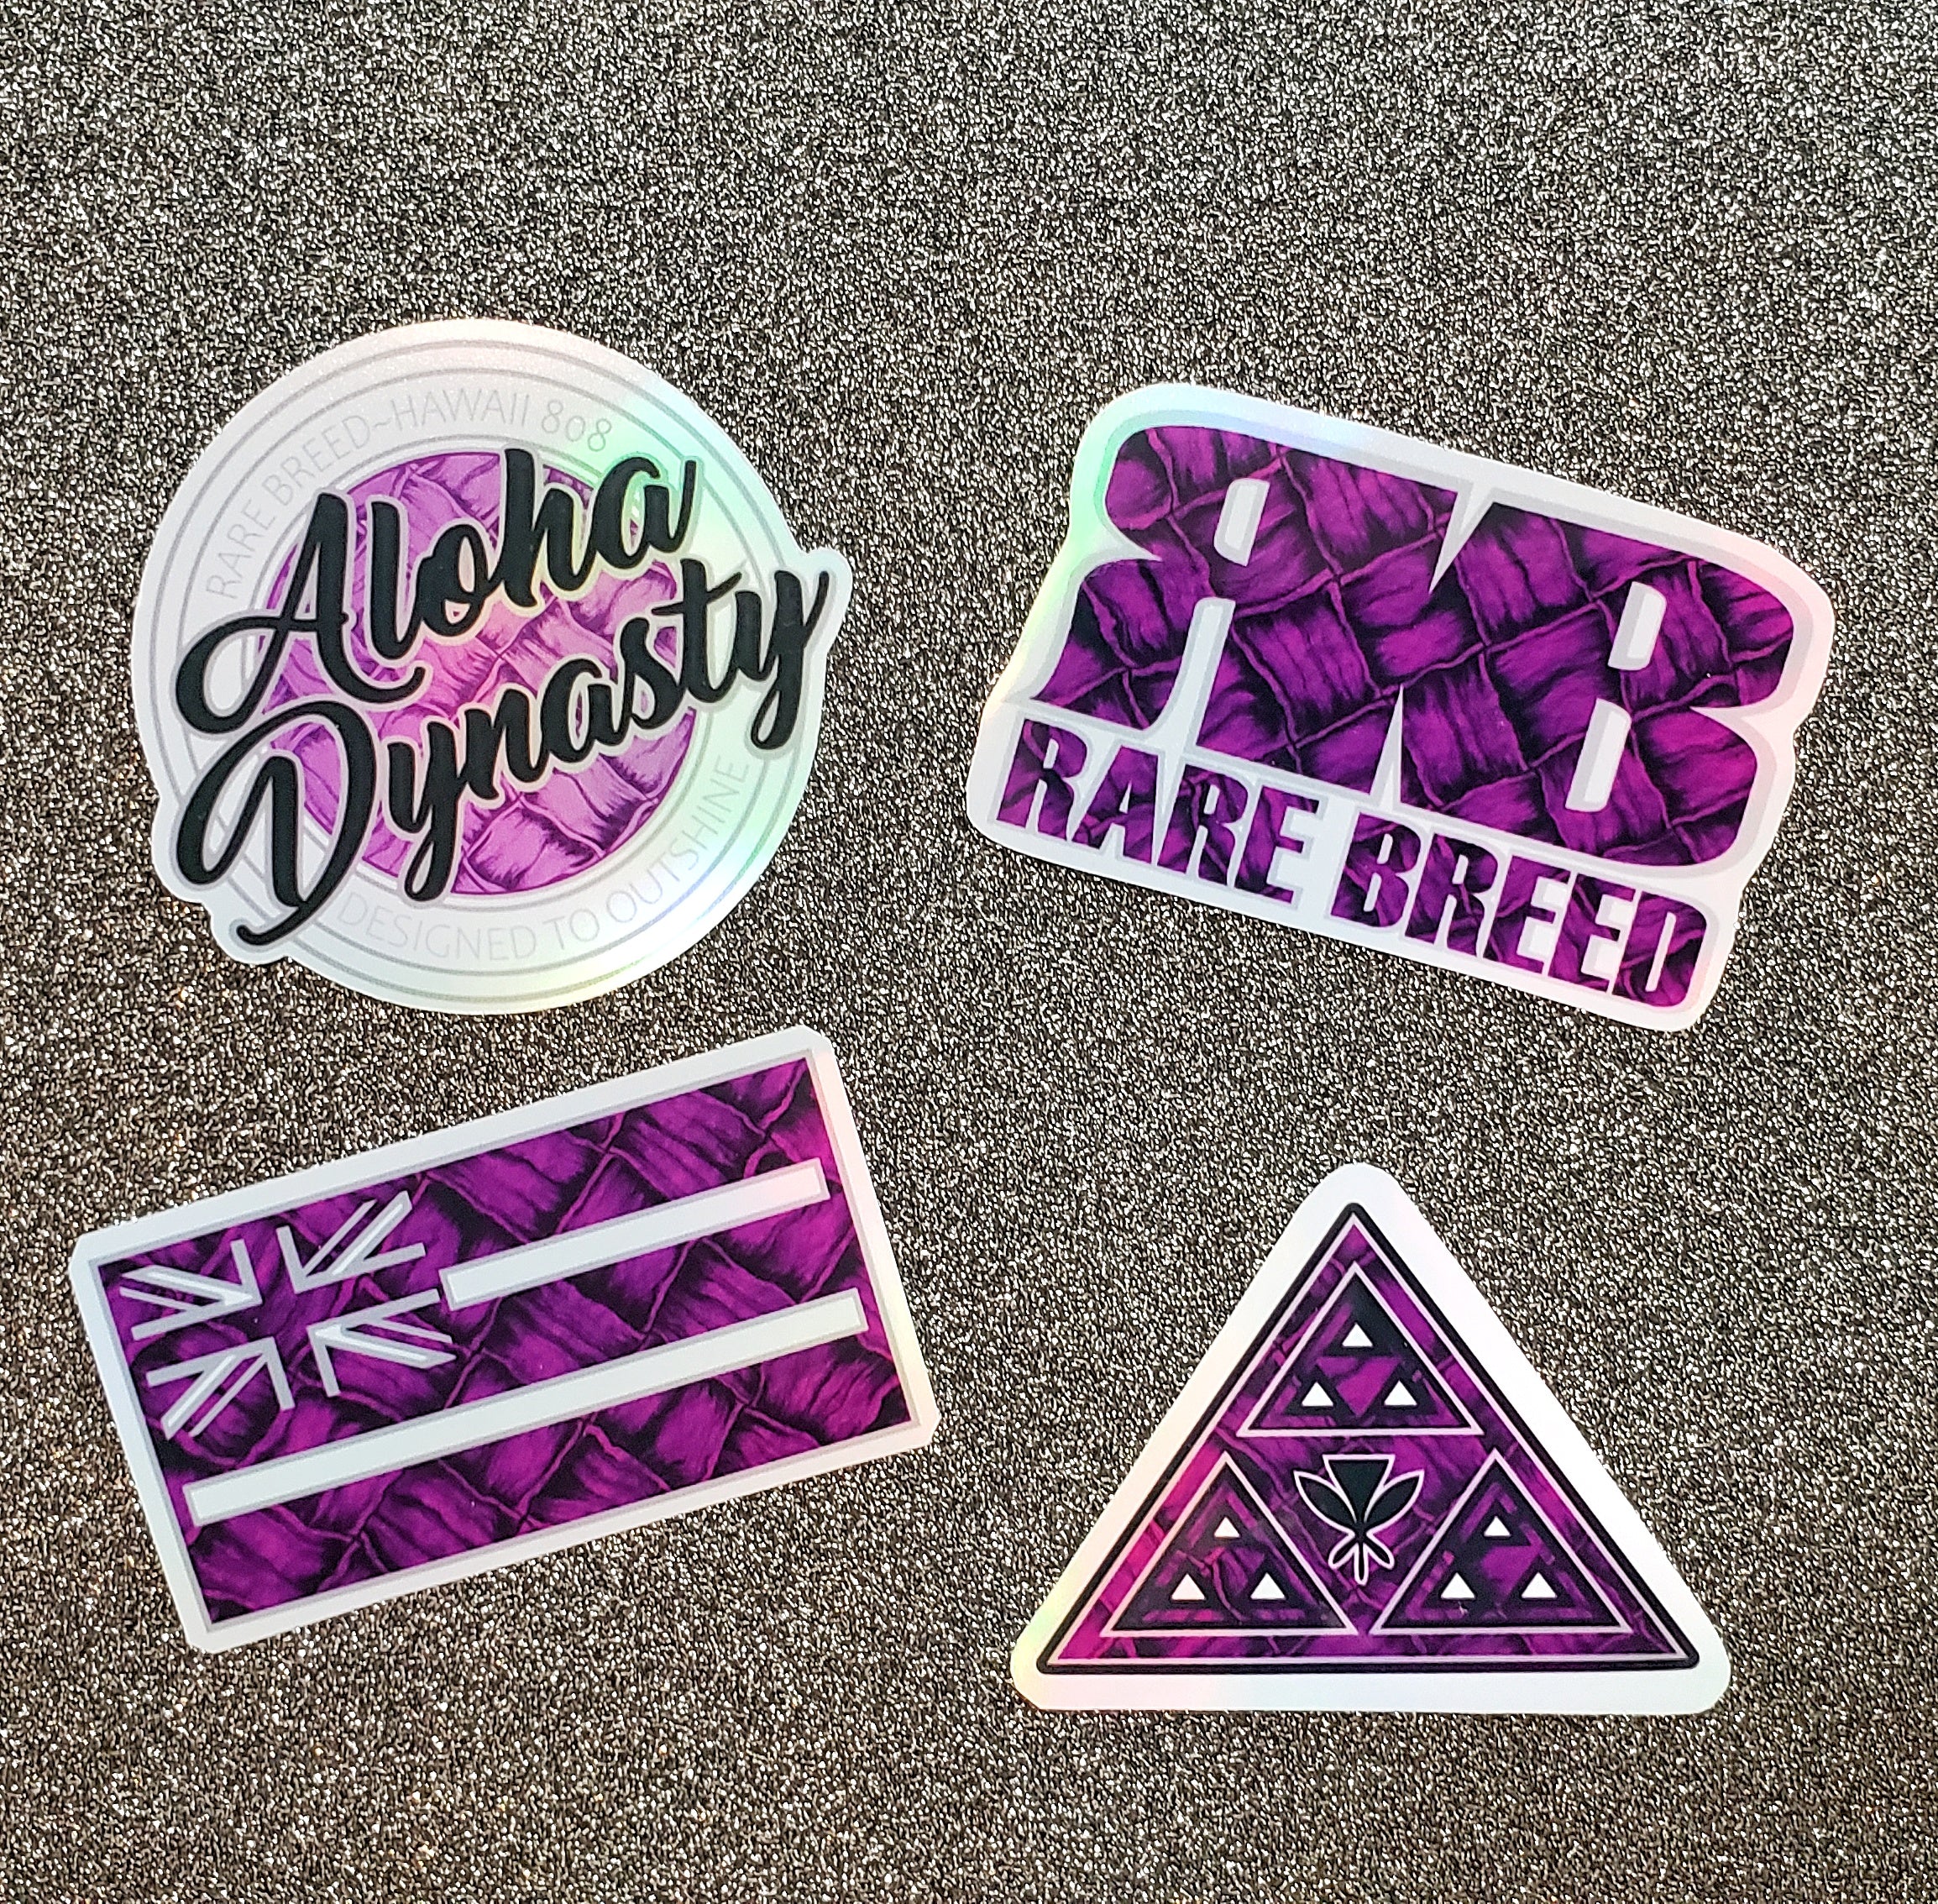 Rare Breed Maui, Aloha Dynasty Sticker Pack 1